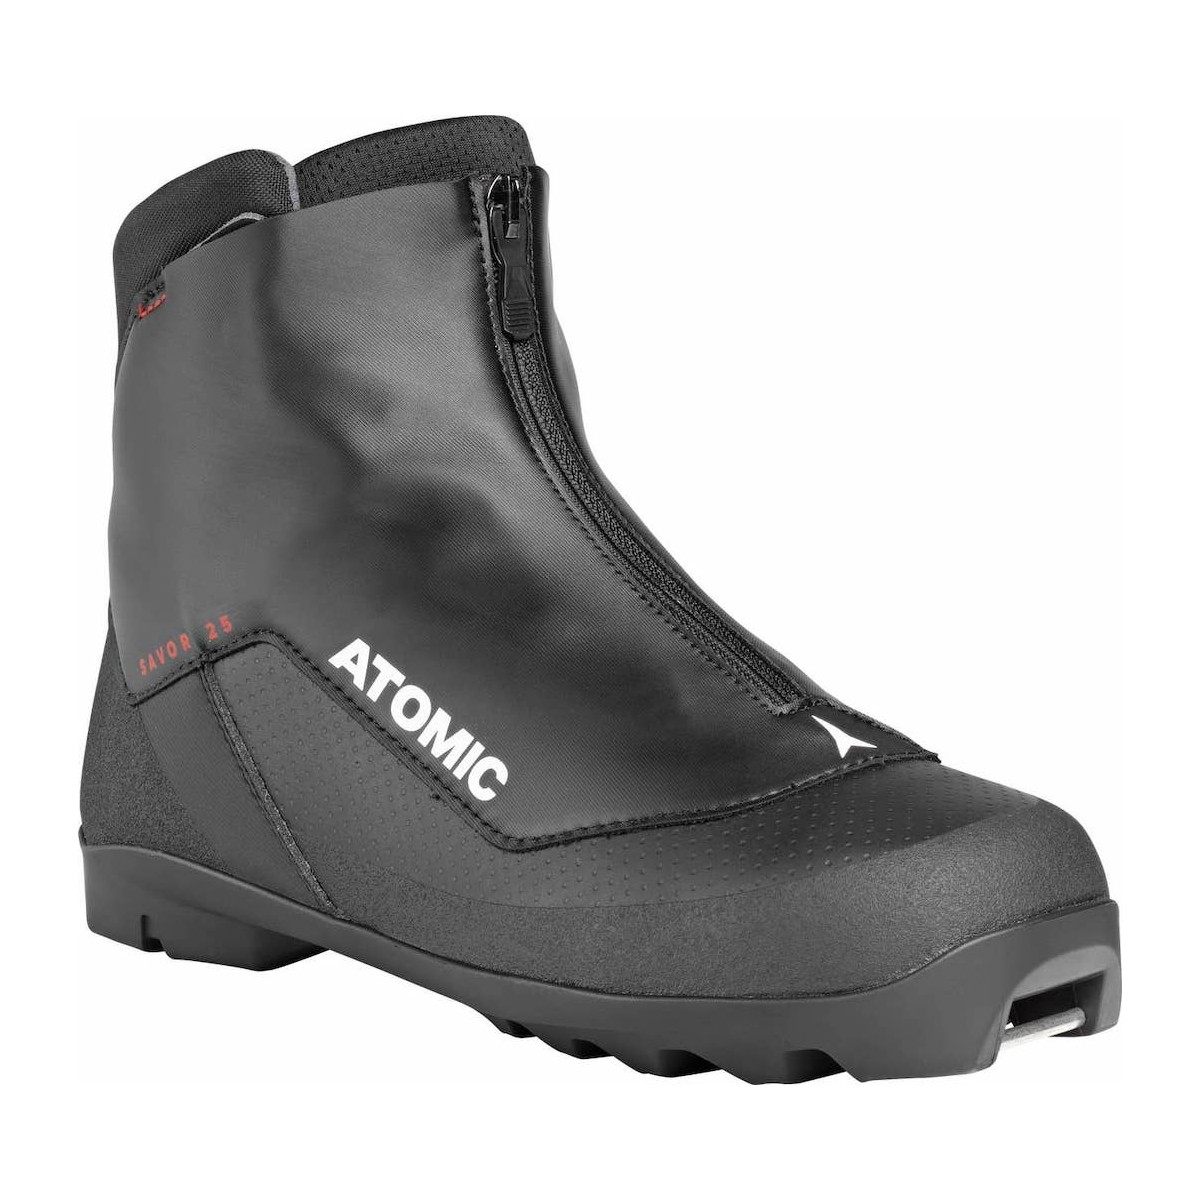 ATOMIC SAVOR 25 PROLINK classic nordic boots - black